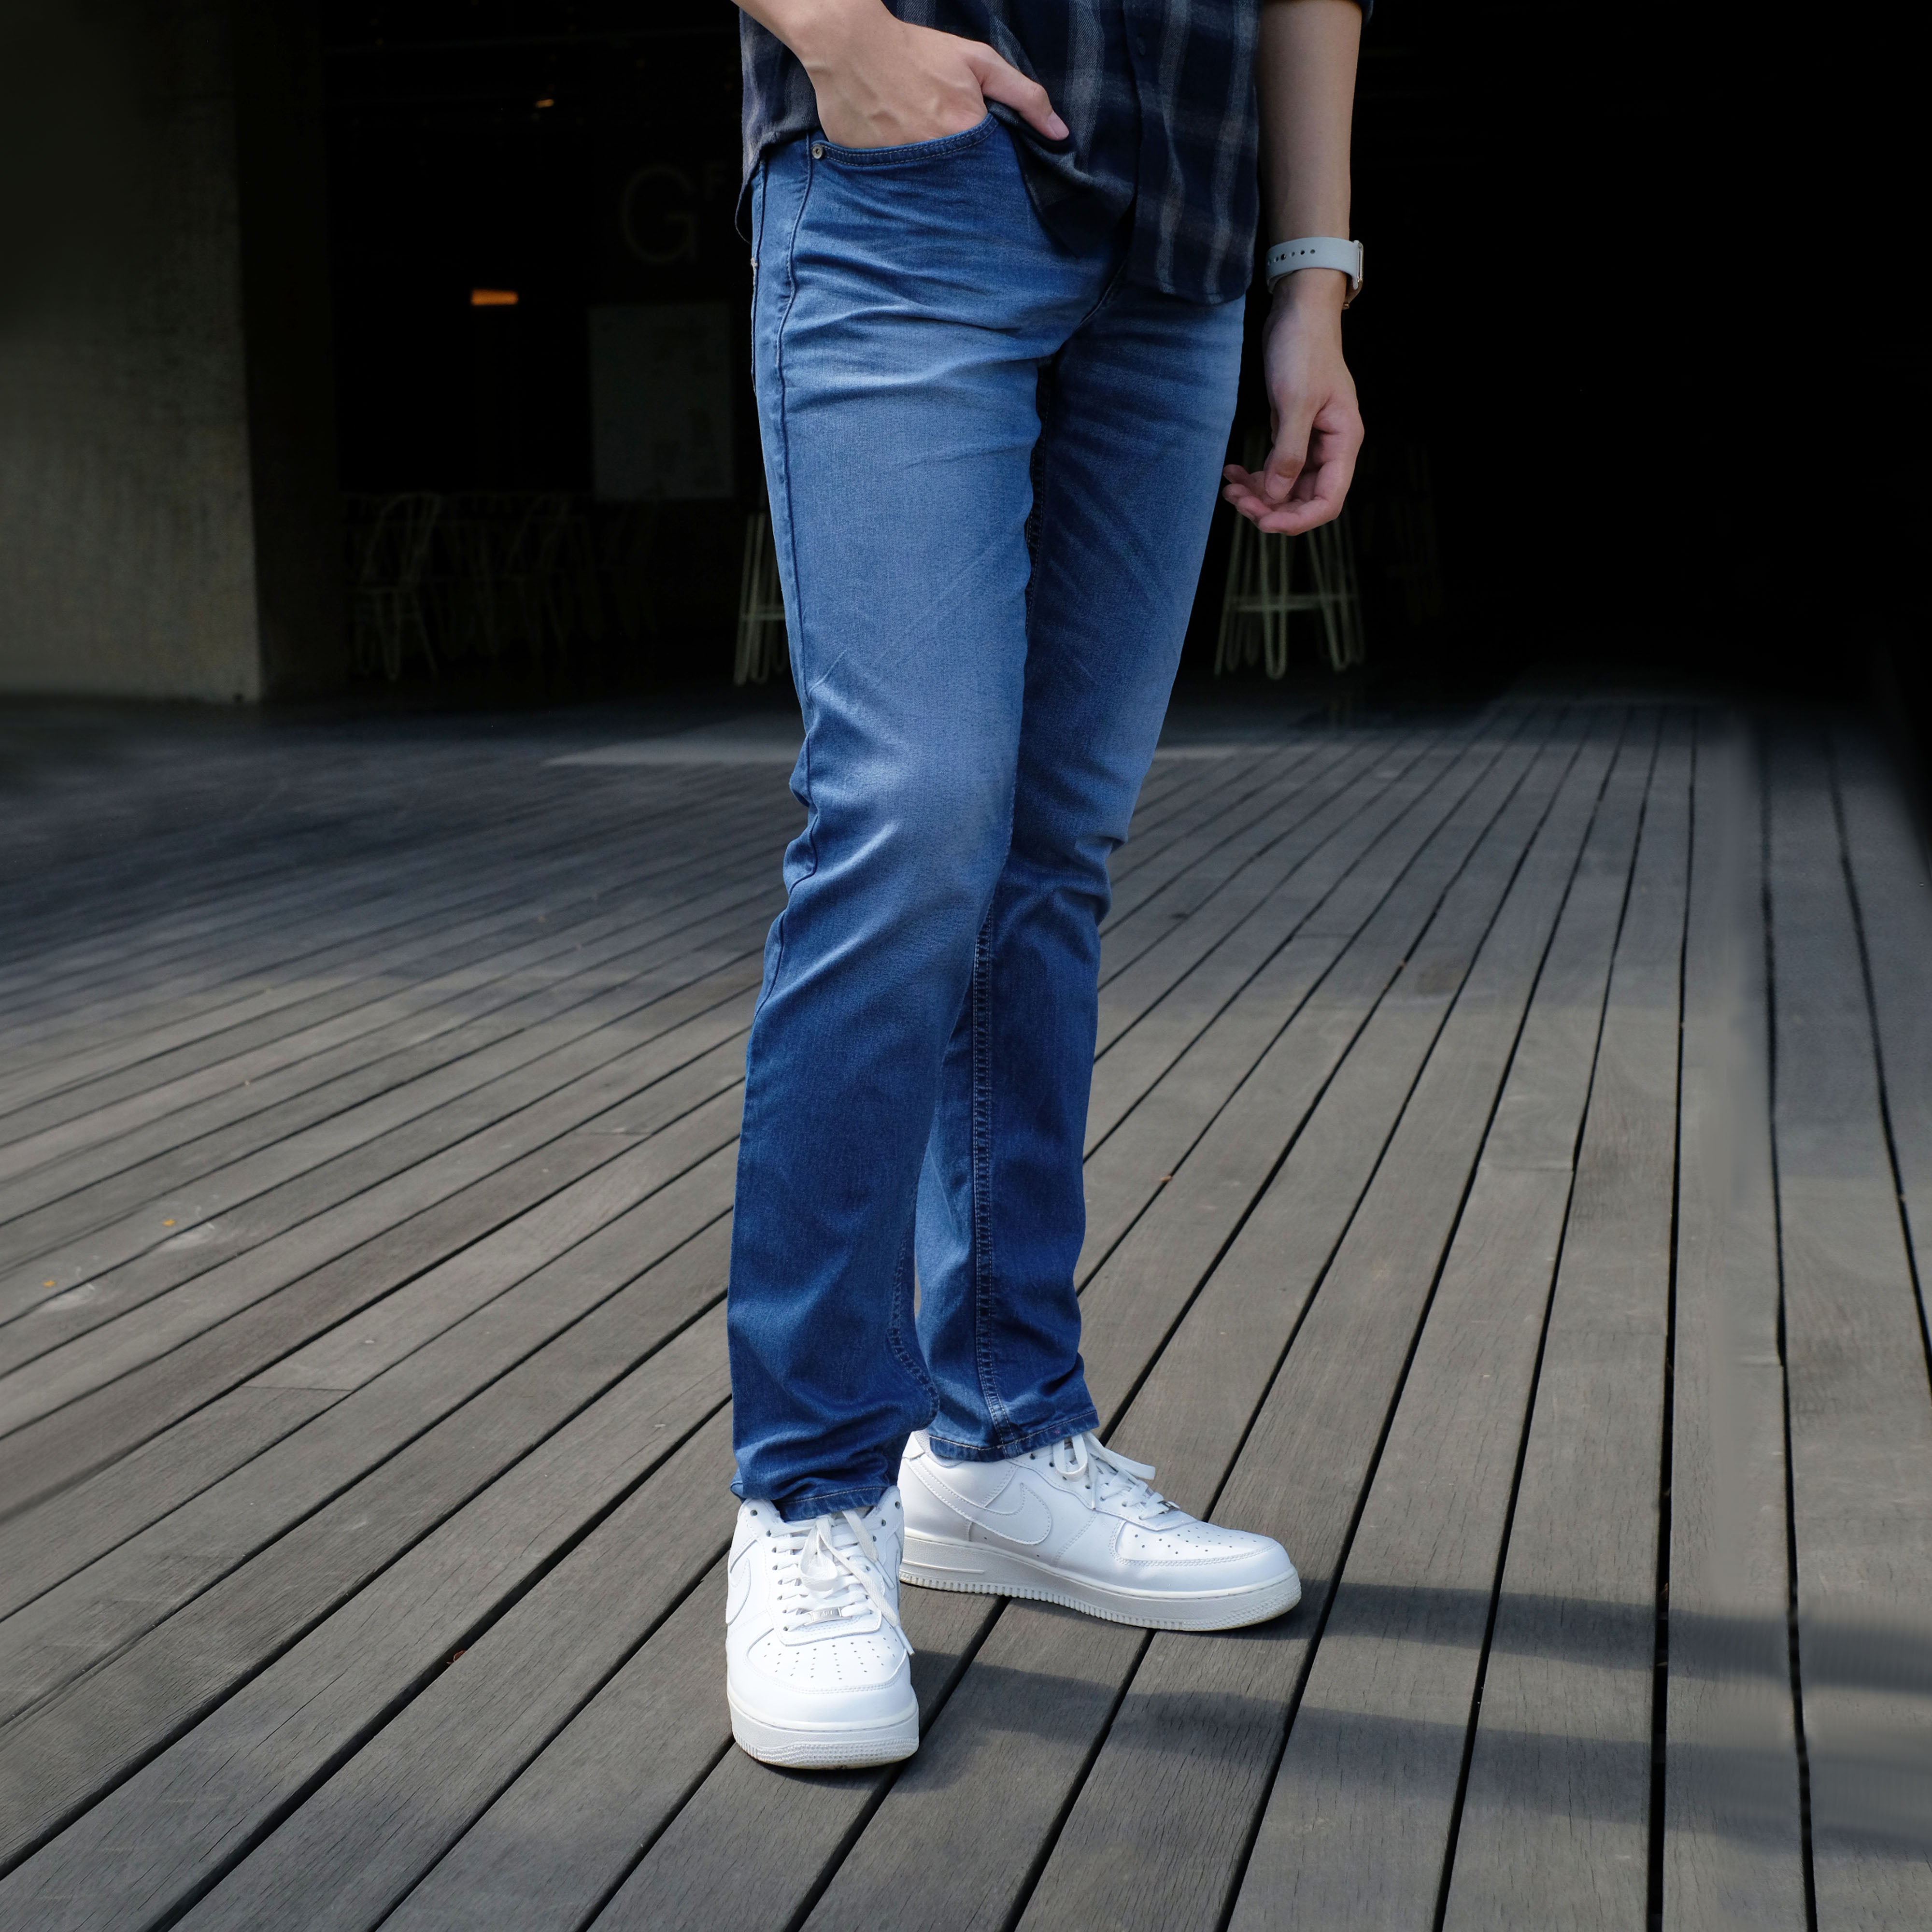 CUTOFF Gordon Celana Jeans Denim Pria Stretch Regular Fit